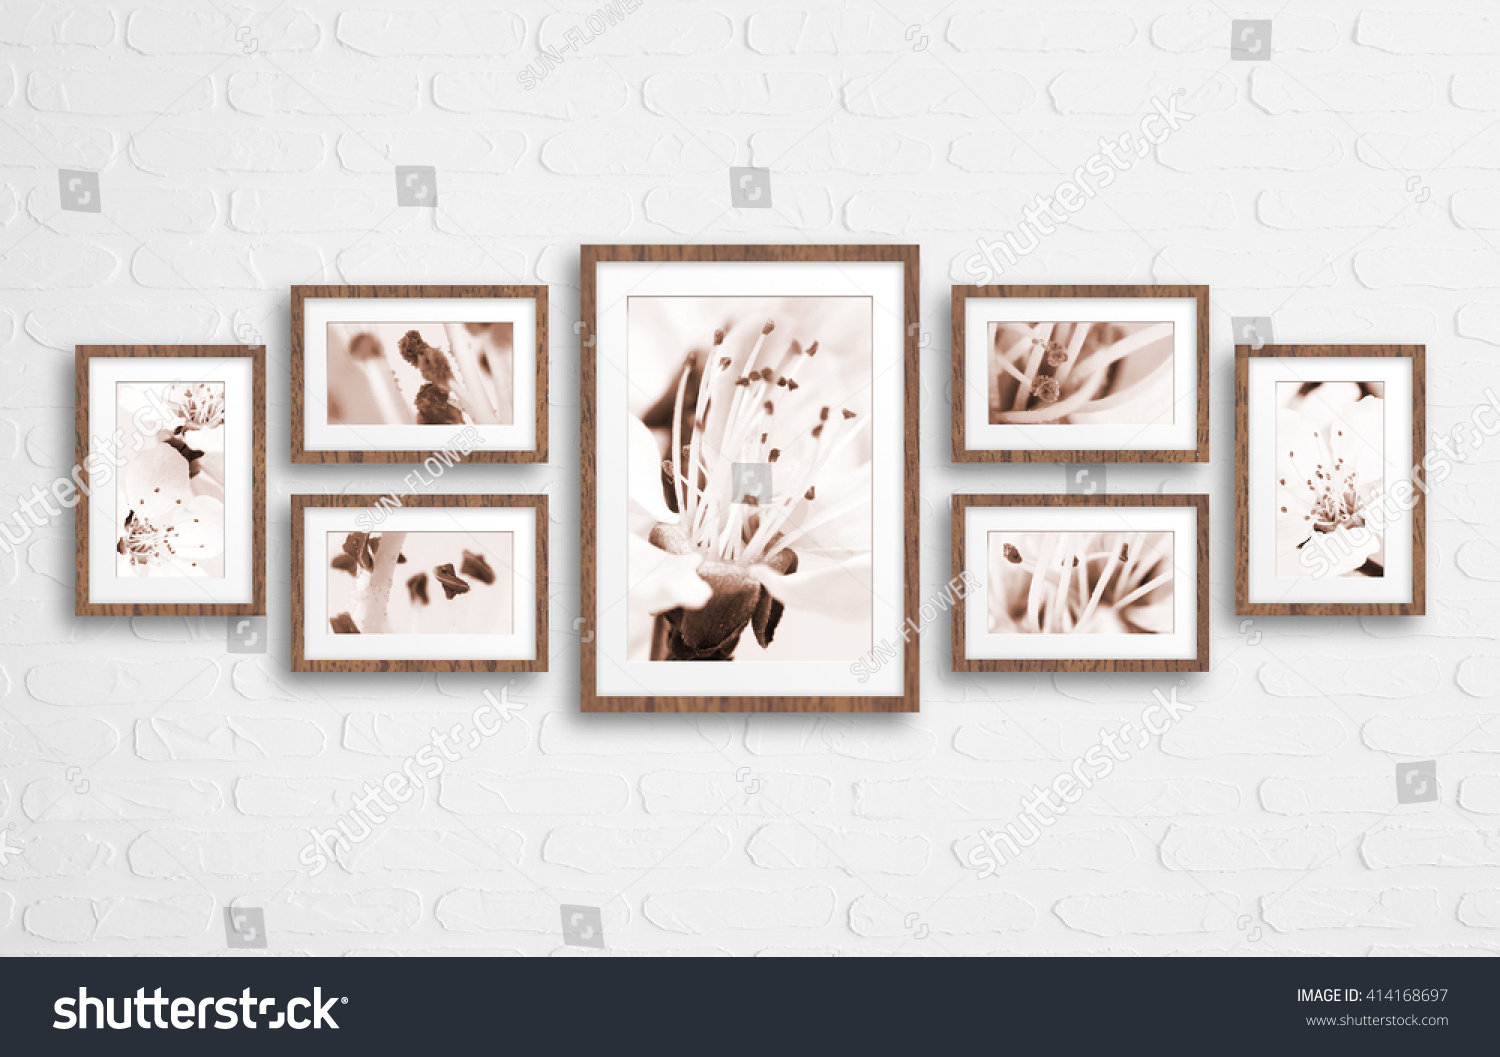 Download Frames Collage Floral Postersseven Sets Mockup Stock Photo Edit Now 414168697 PSD Mockup Templates